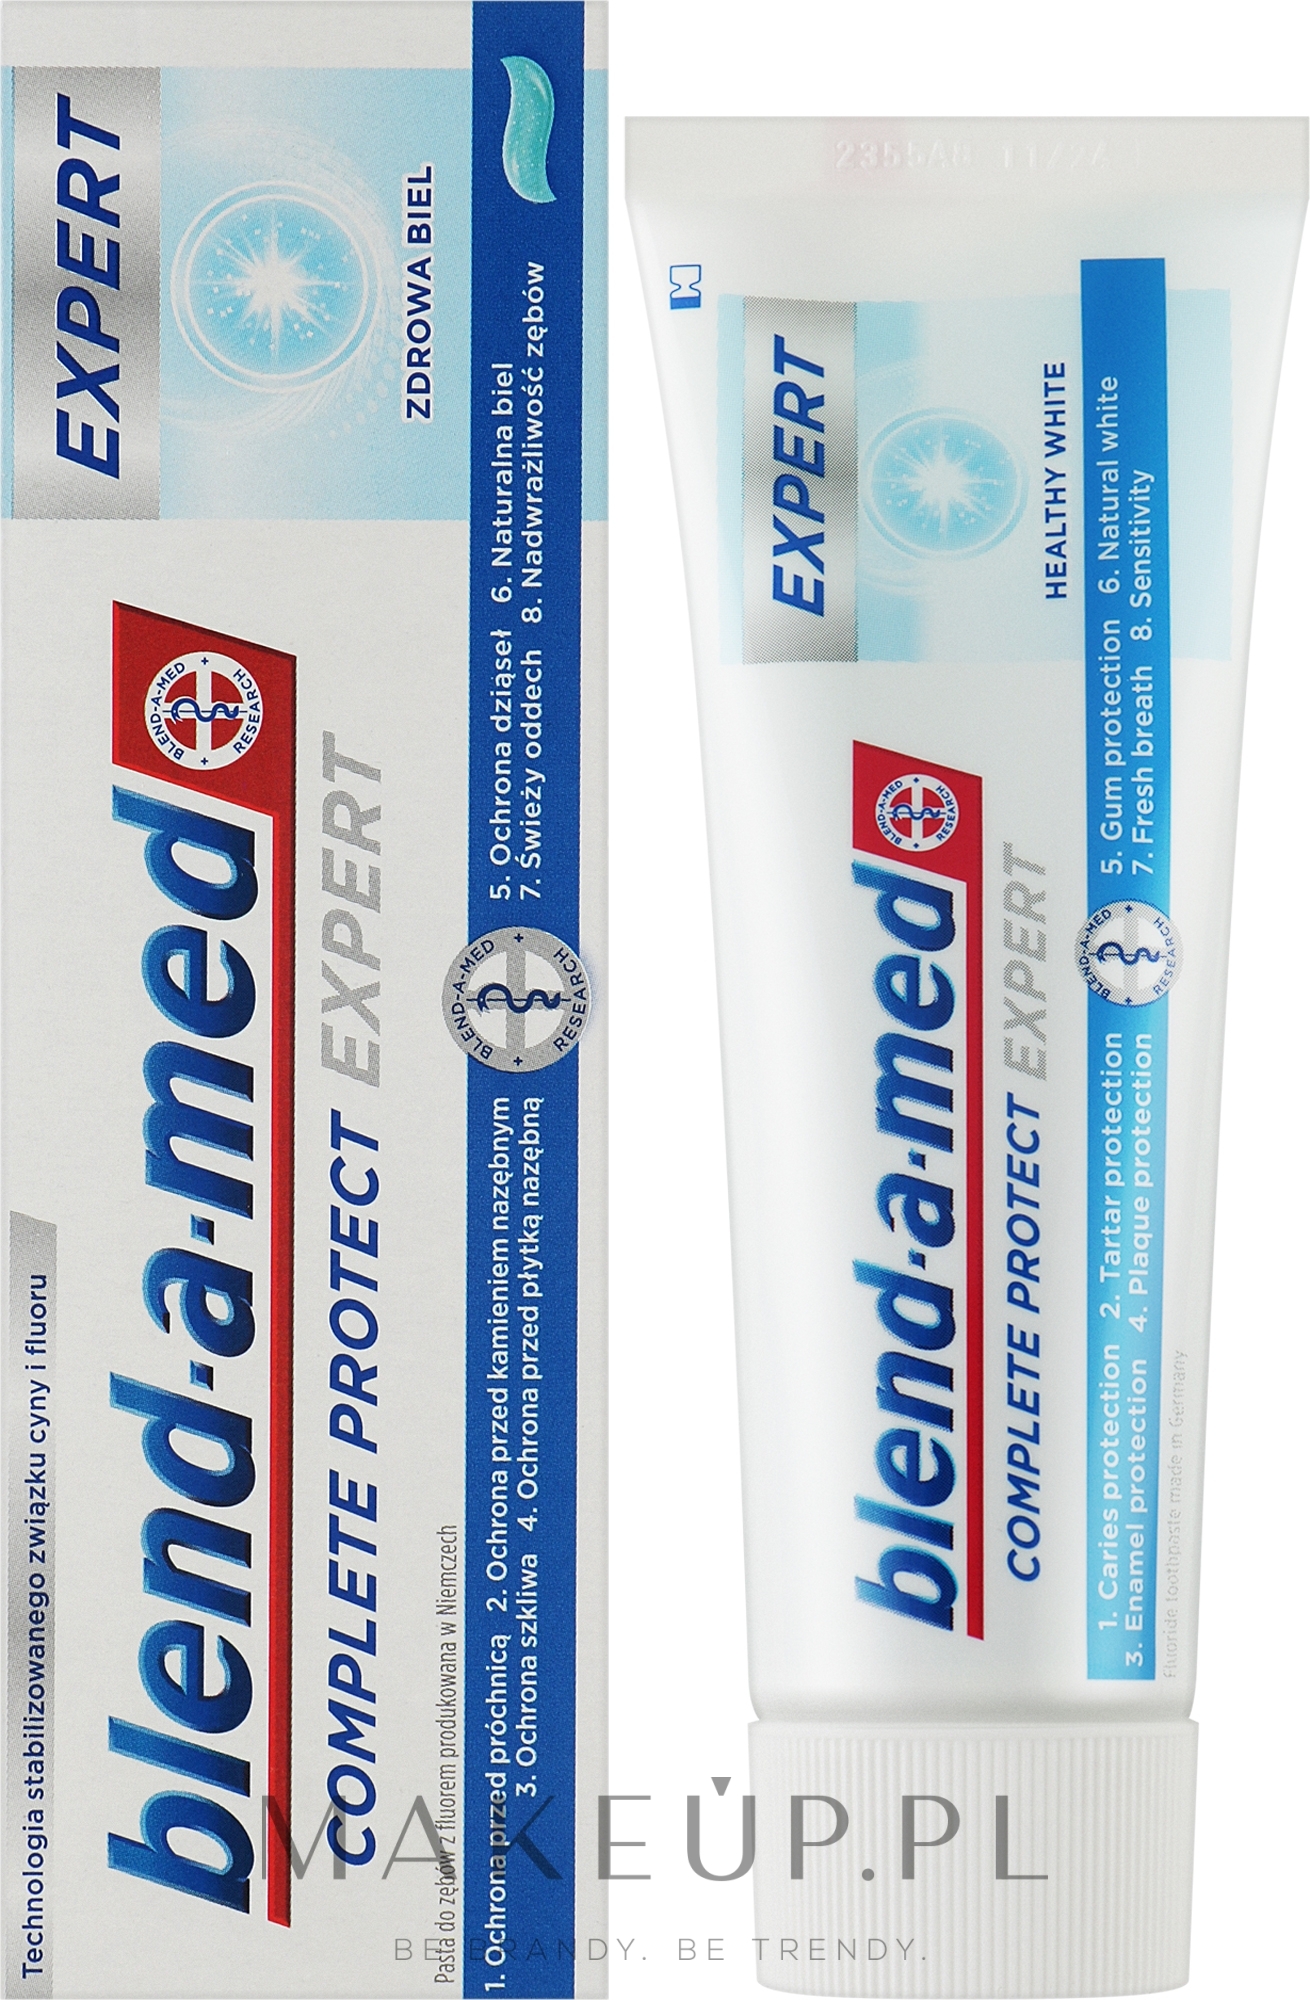 Wybielająca pasta do zębów - Blend-a-med Complete Protect Expert Healthy White Toothpaste — Zdjęcie 75 ml